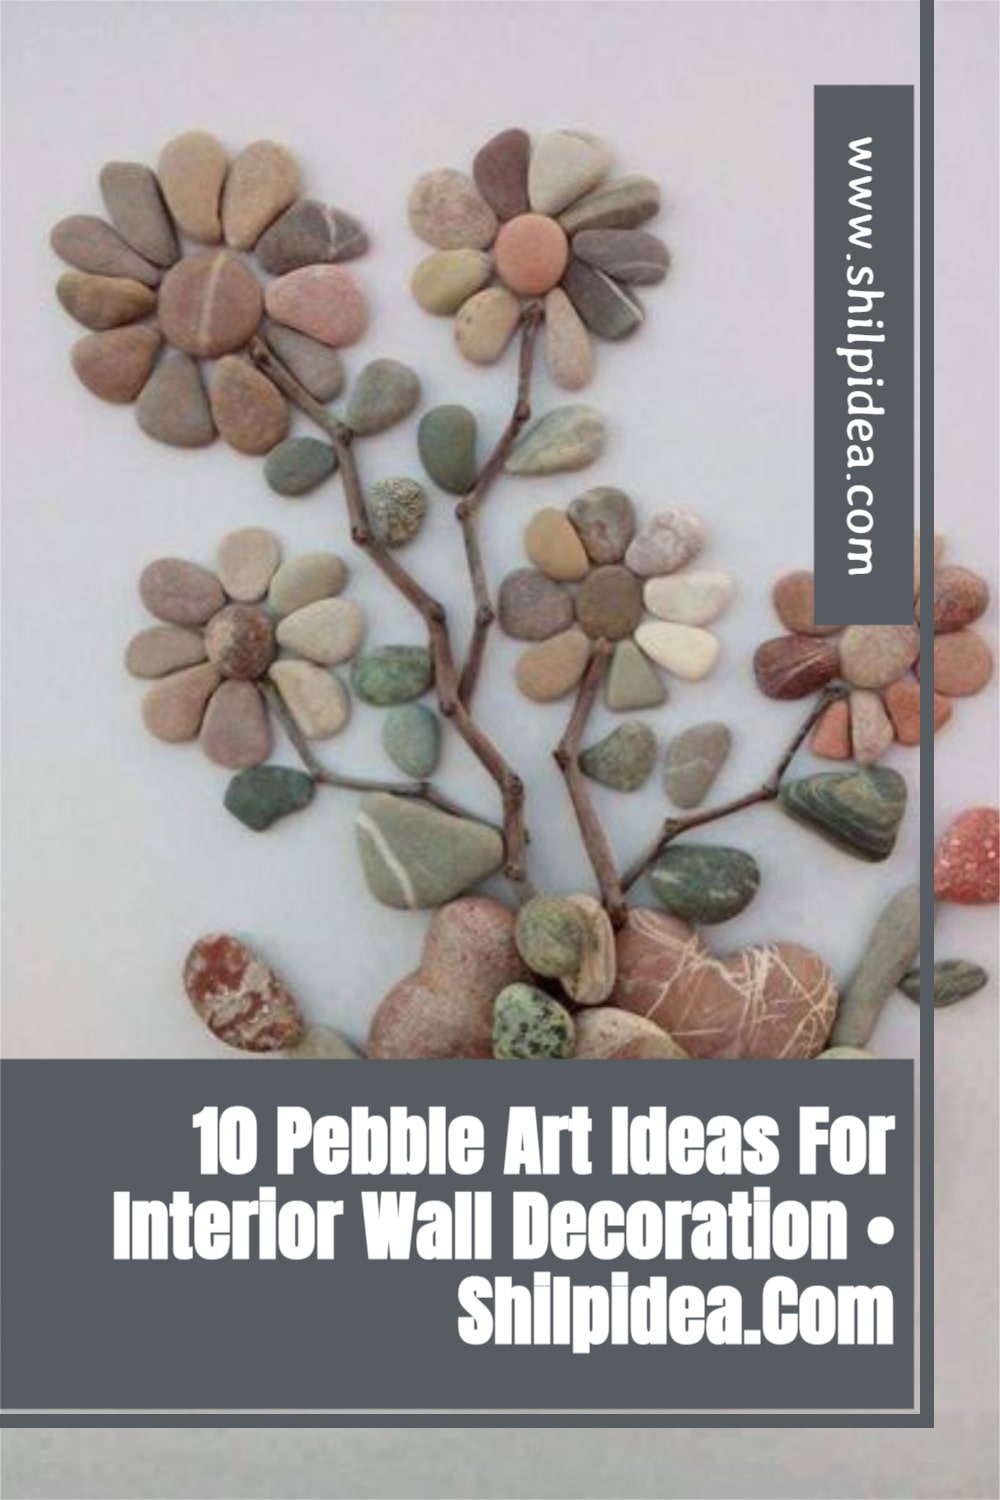 pebble-art-ideas-shilpidea